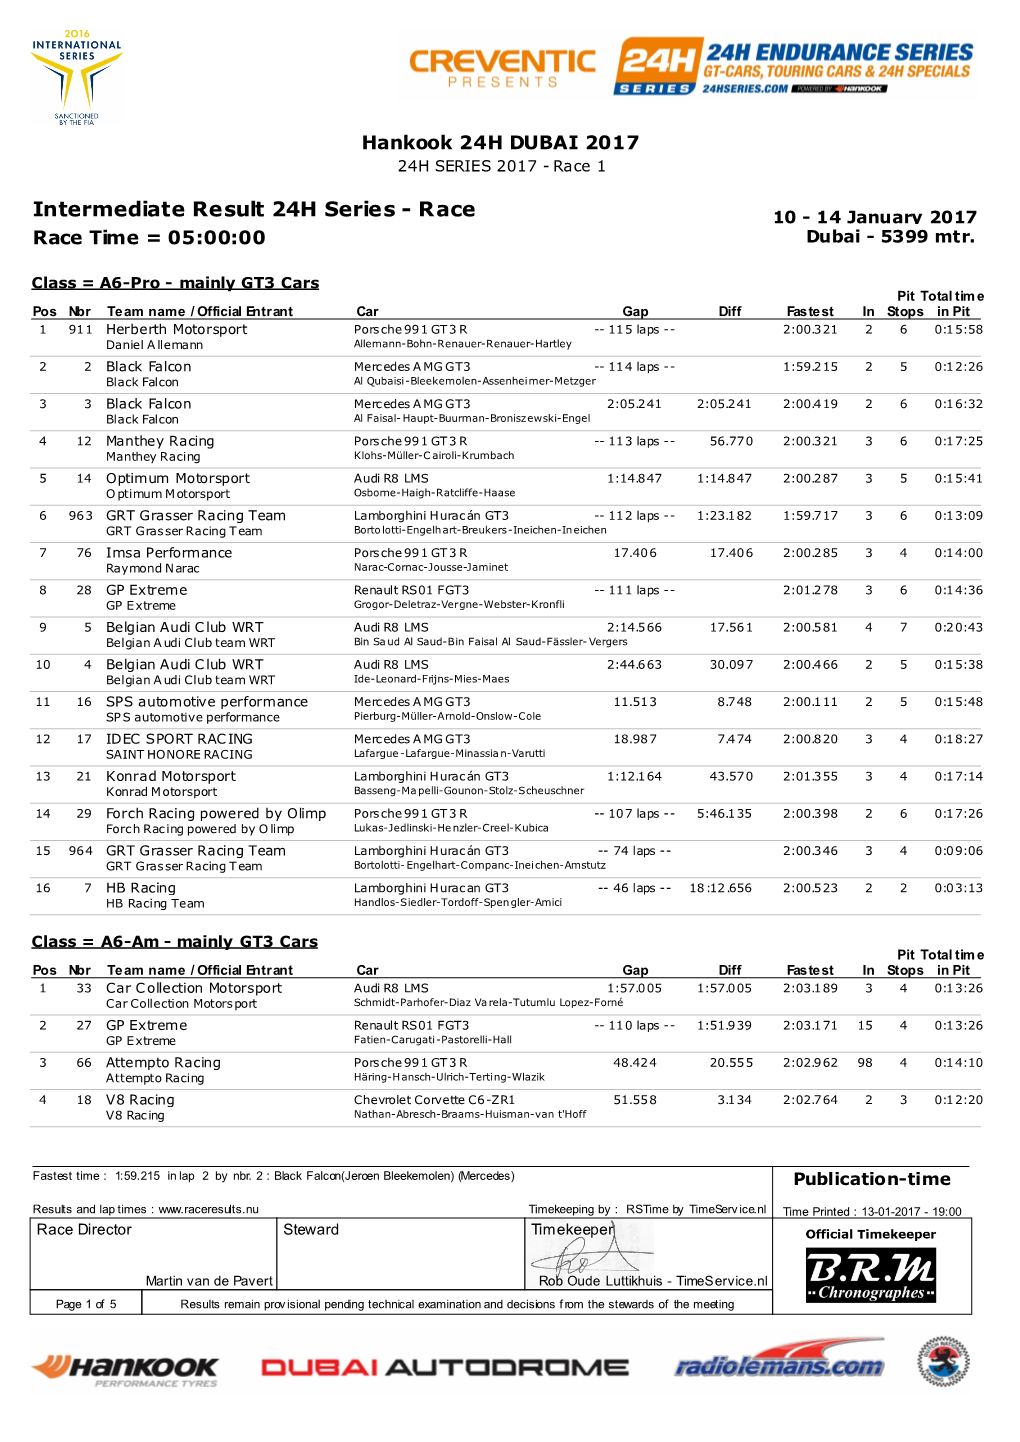 Intermediate Result 24H Series - Race 10 - 14 January 2017 Race Time = 05:00:00 Dubai - 5399 Mtr